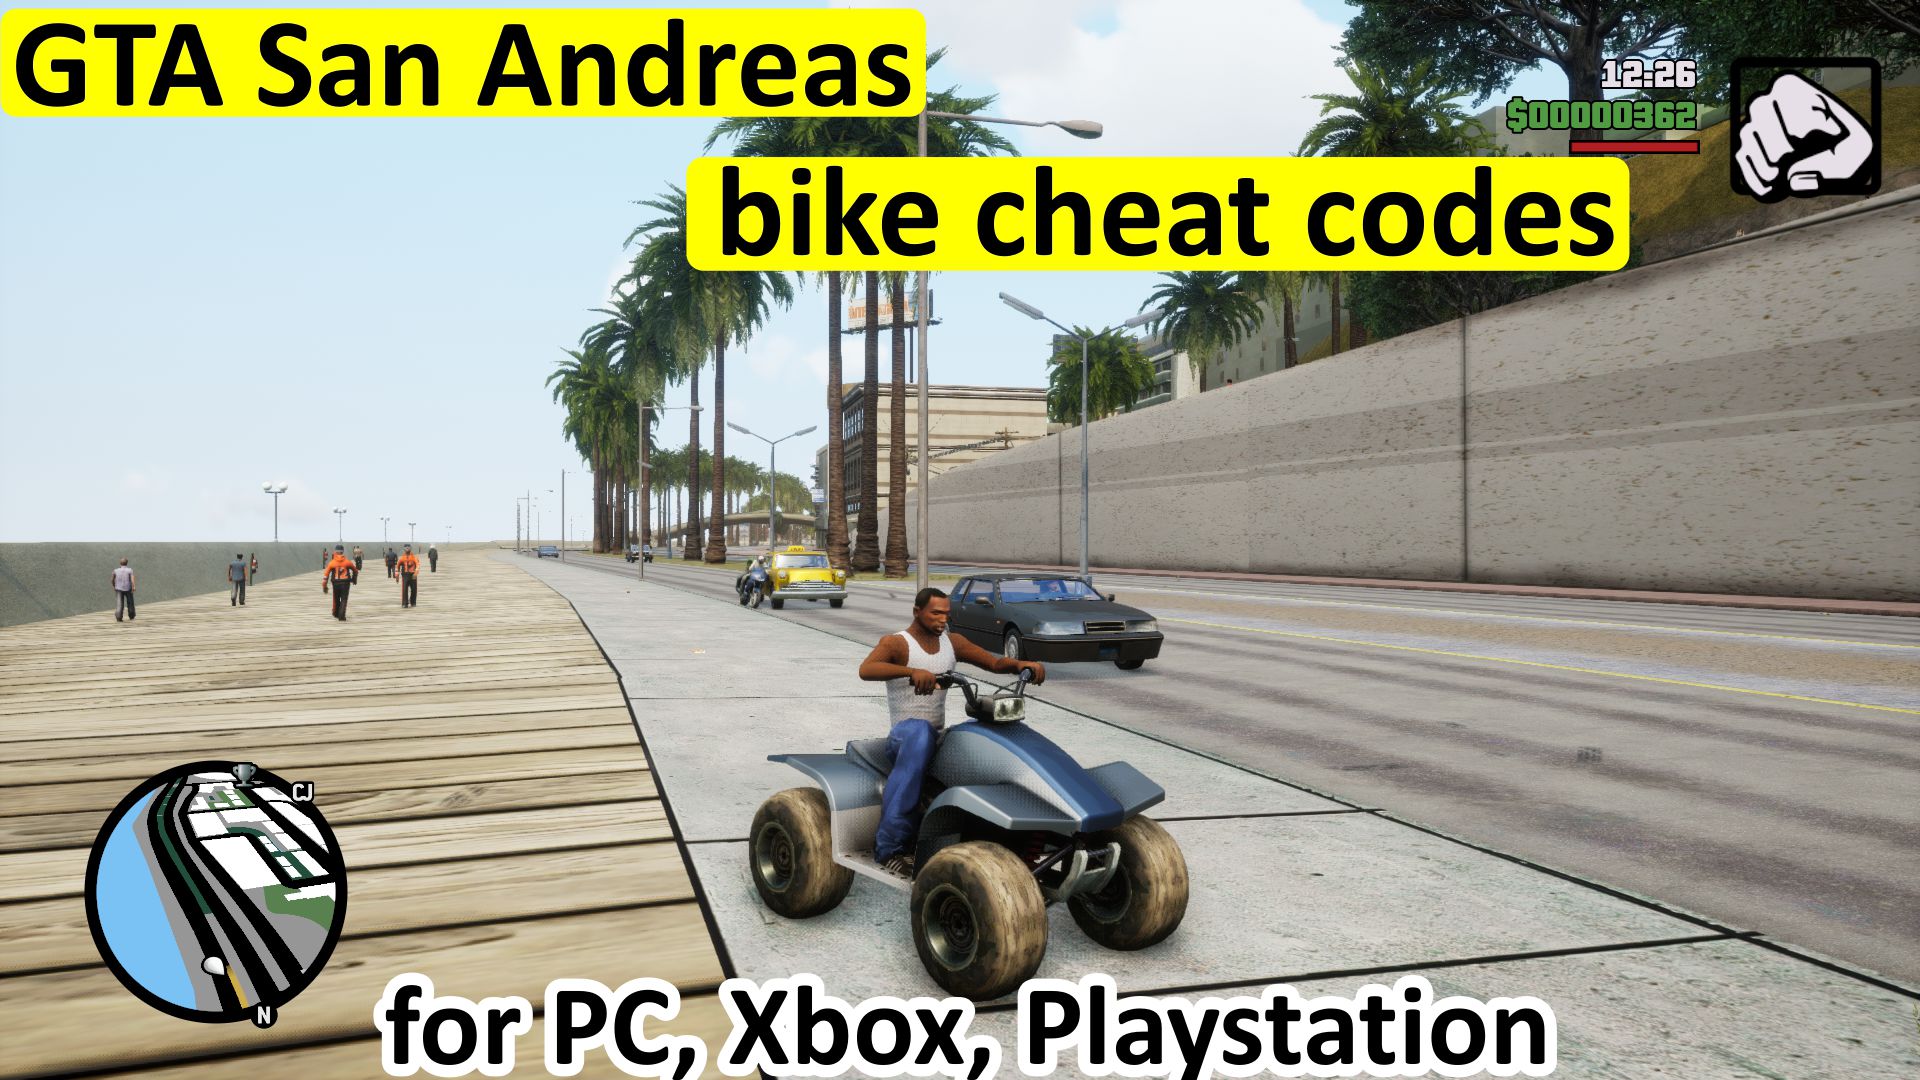 GTA San Andreas bike cheat code for PC, Xbox, Playstation